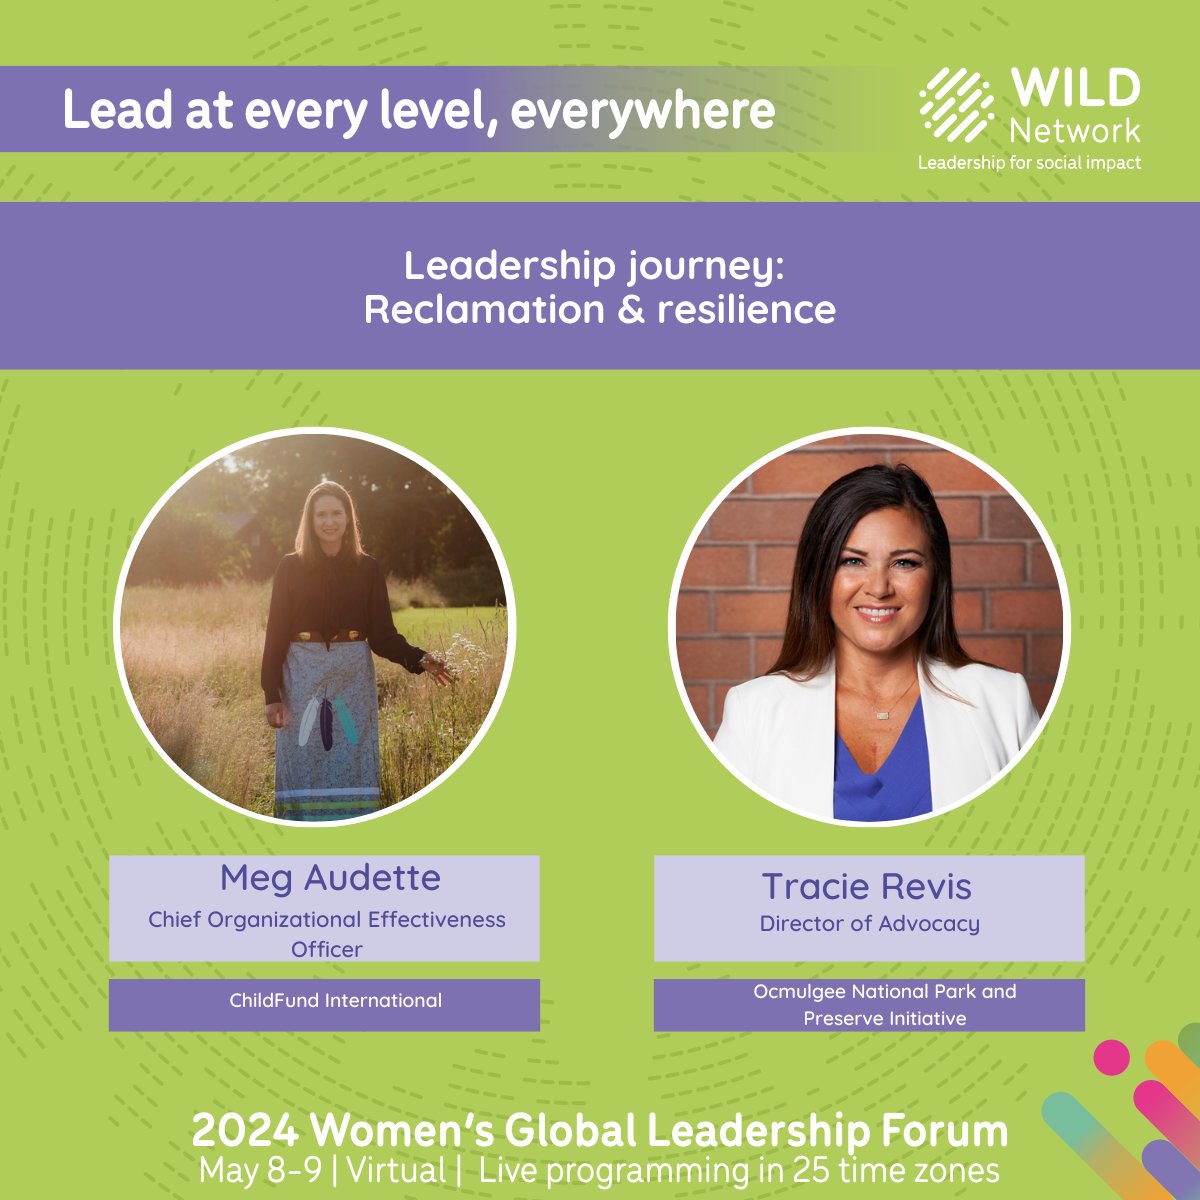 🌟 Up next!🌟 'Leadership journey: Reclamation & resilience' at the virtual 2024 Women’s Global Leadership Forum @Ocmulgee_Park Program: tinyurl.com/muxamk7z #WILDleaders